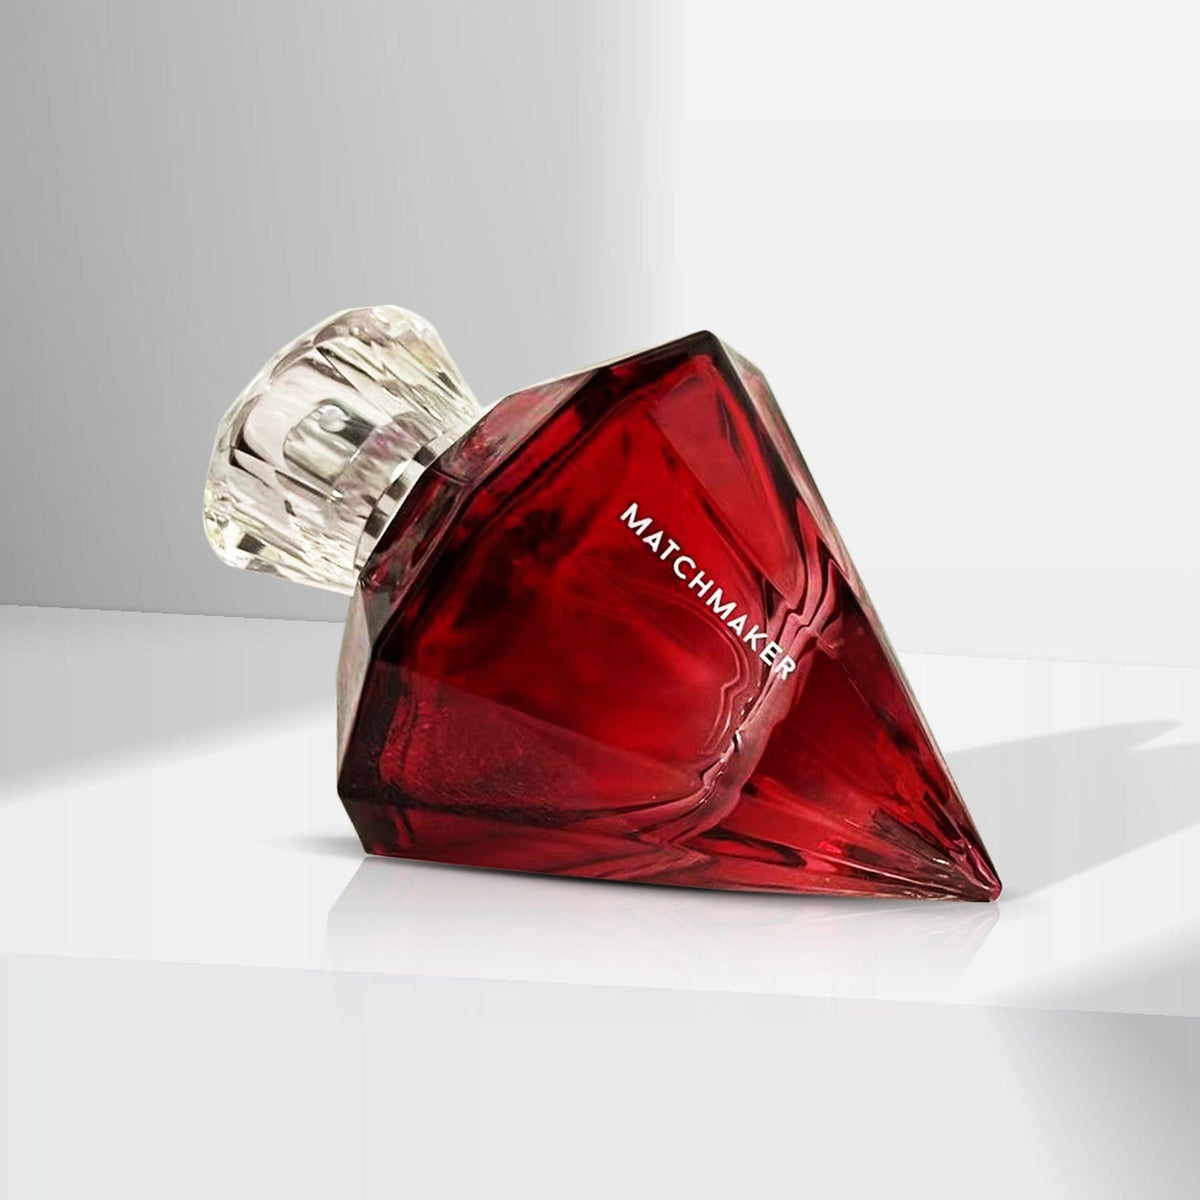 Matchmaker Red Diamond LGBTQ Pheromone Parfum - Attract Her - 30ml / 1.0 fl oz Lubes EYE OF LOVE   